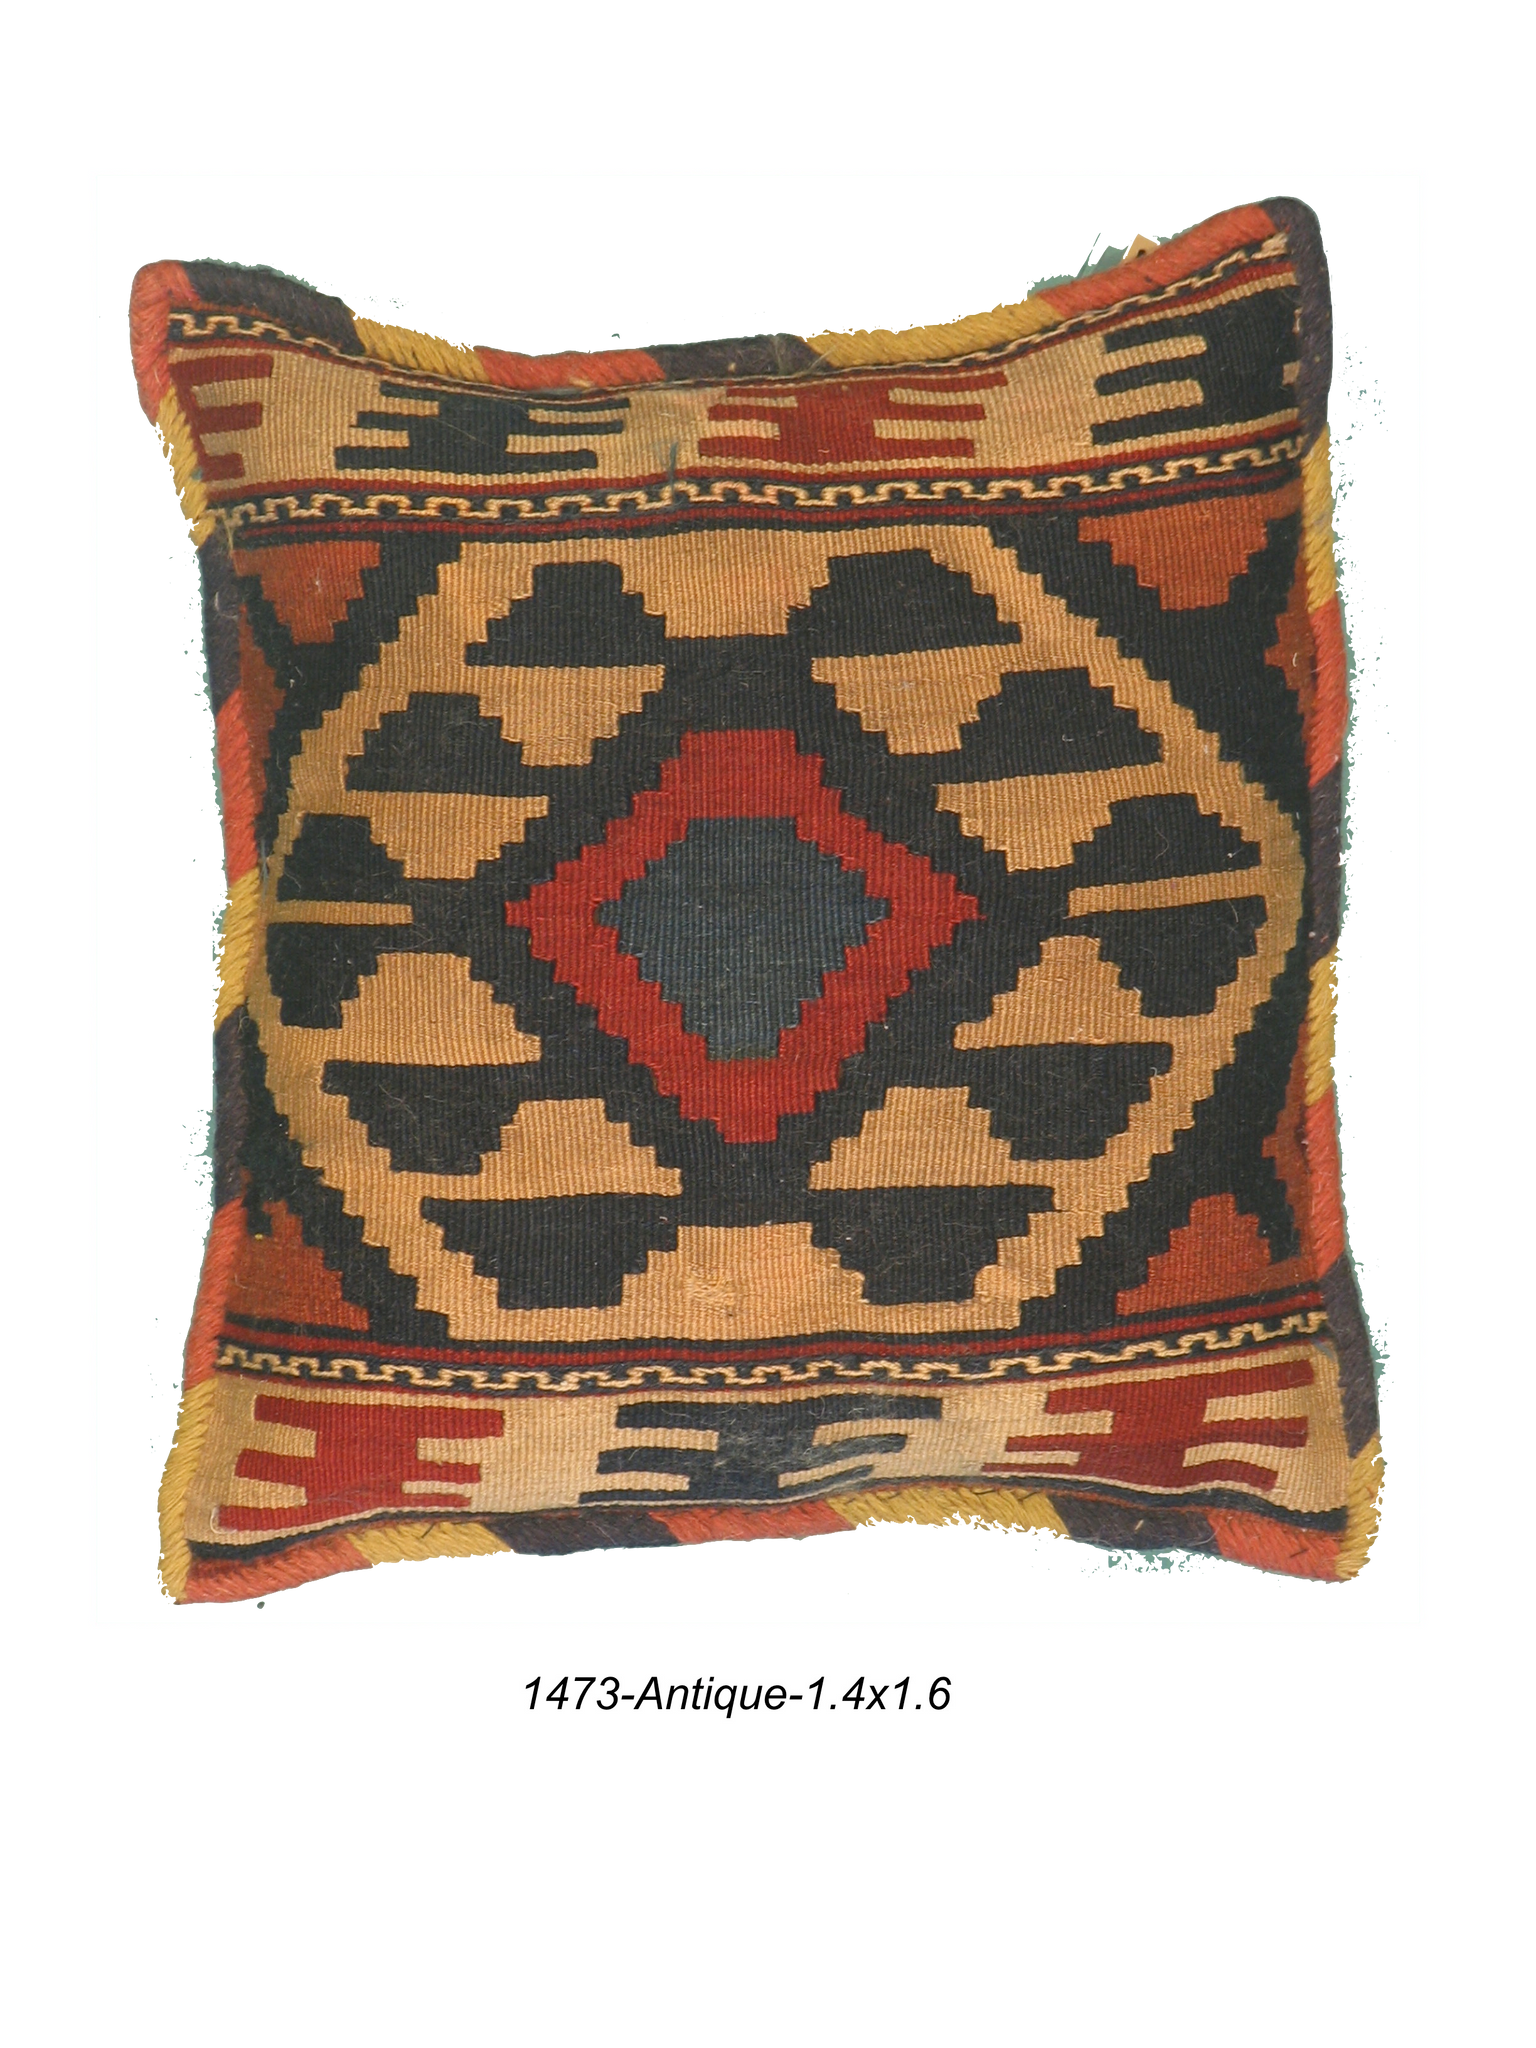 Antique Persian Pillow